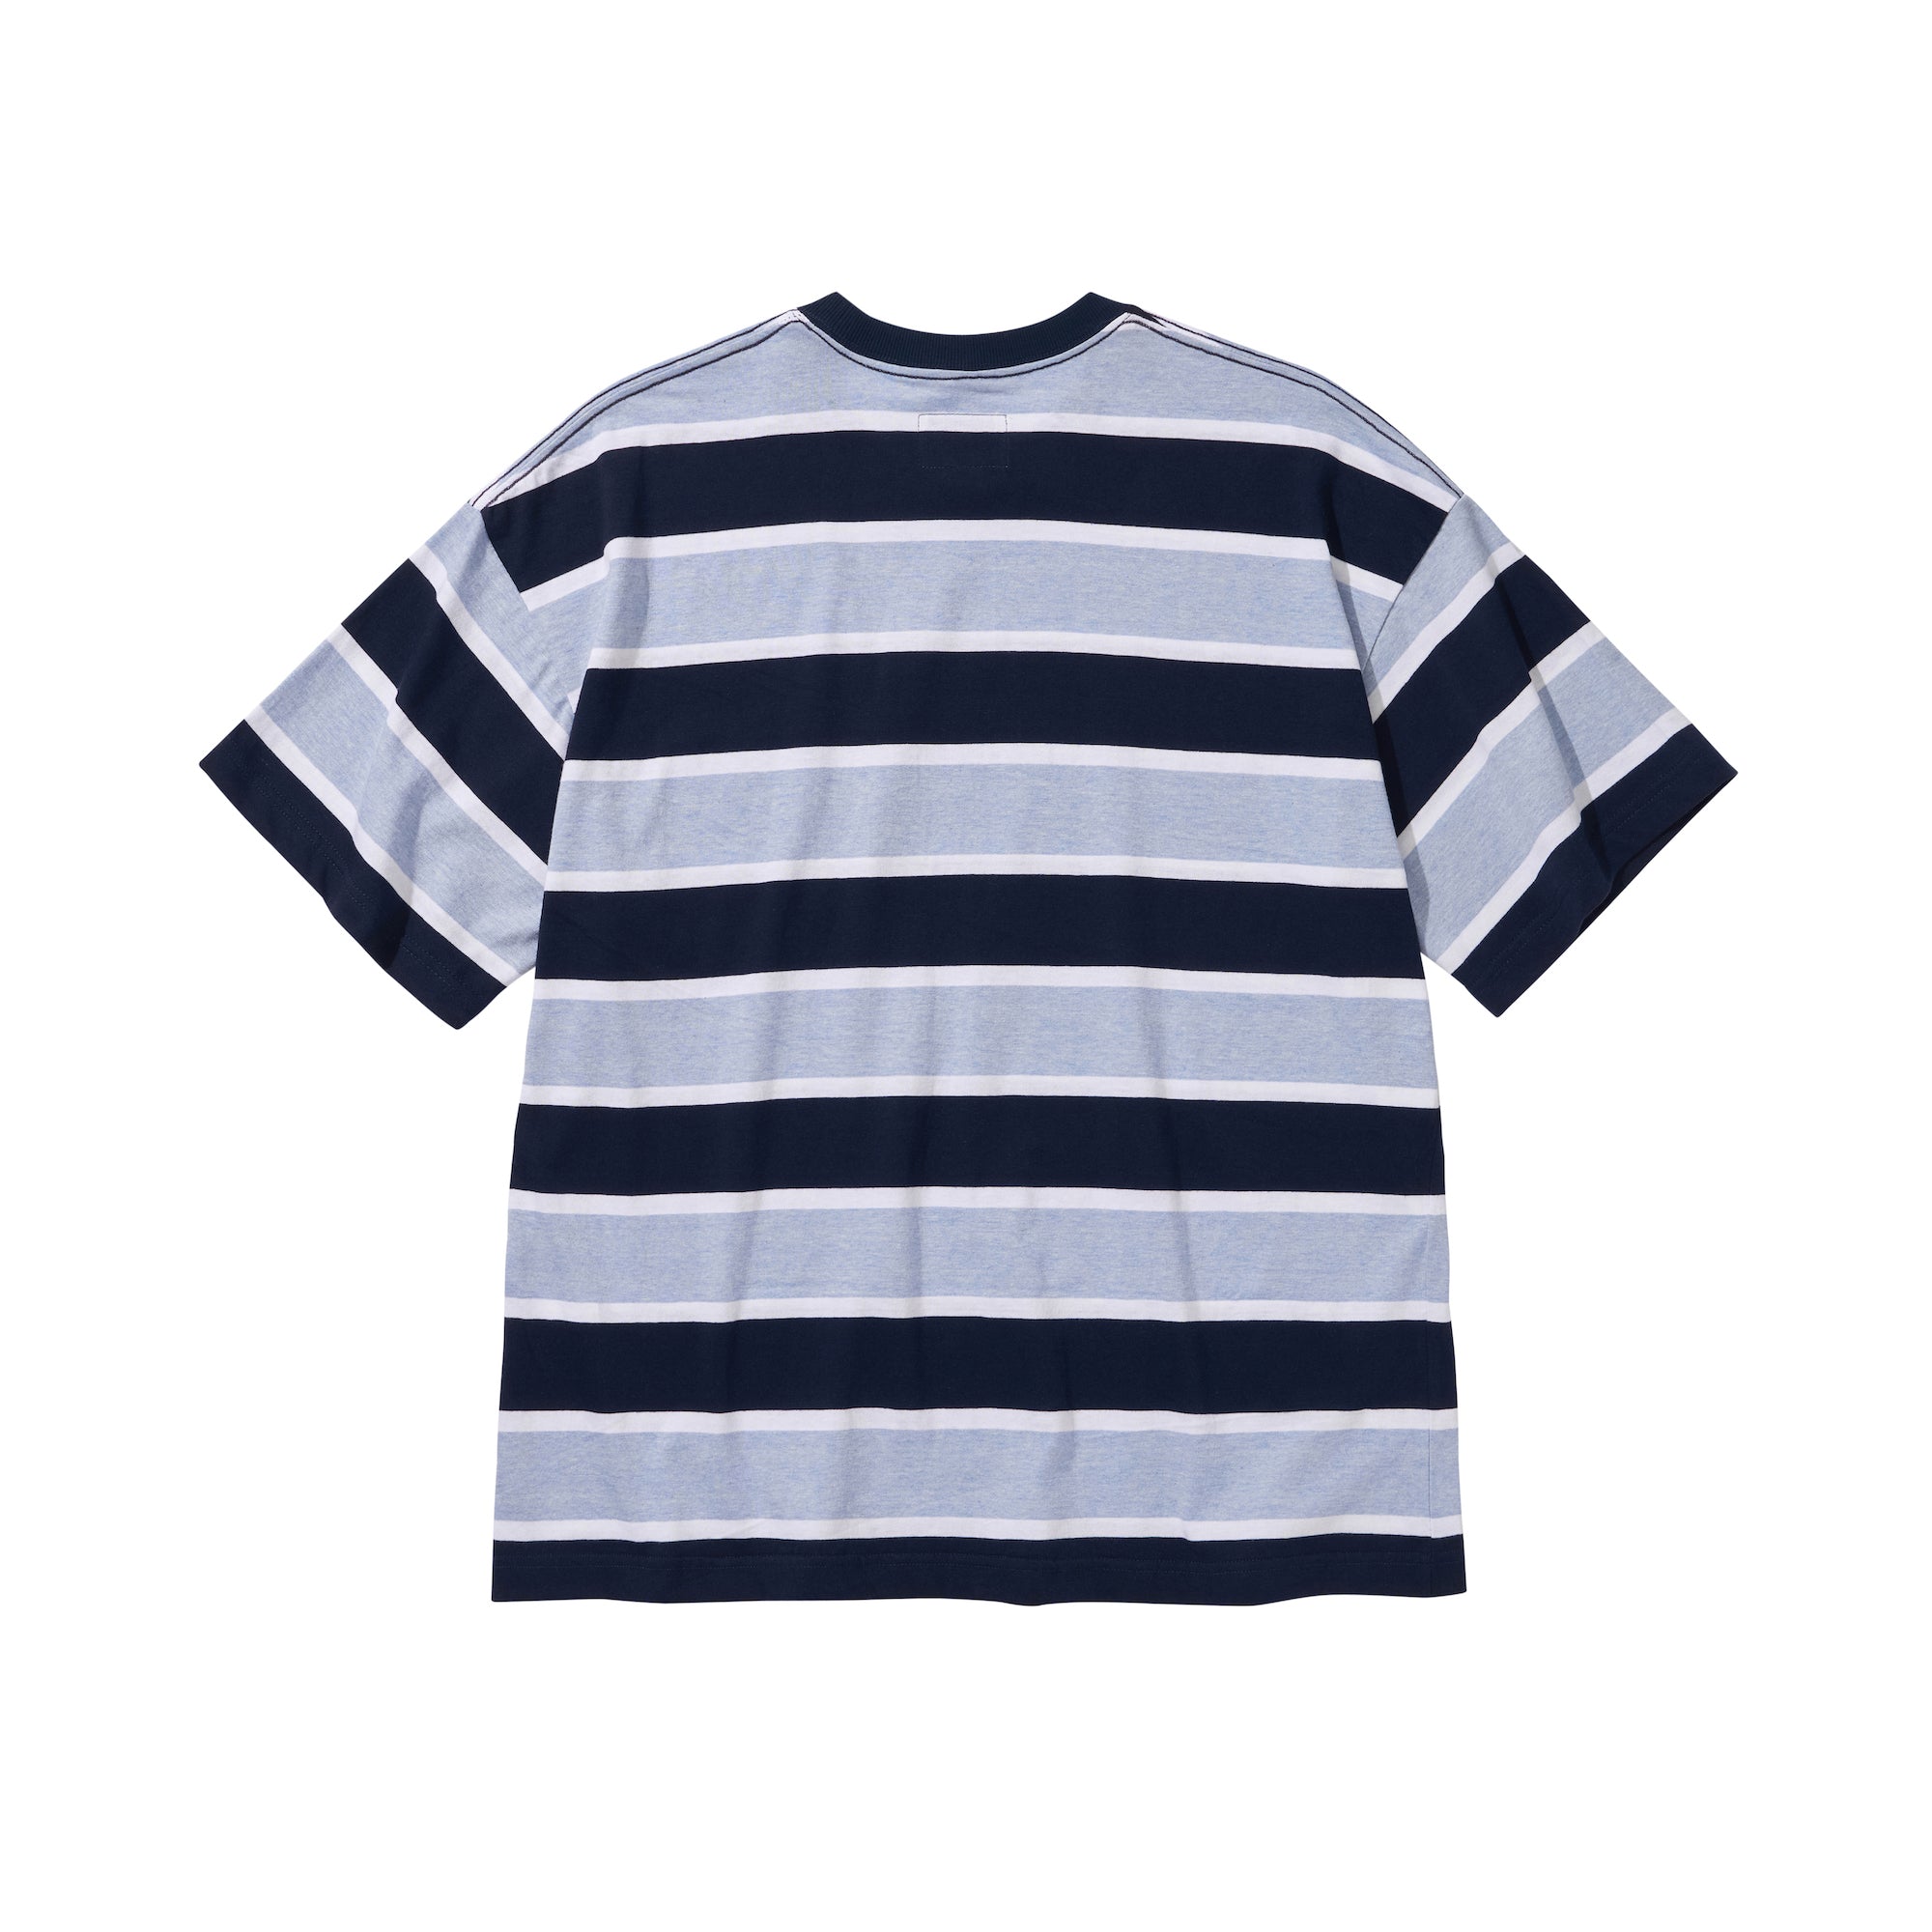 S/S Boder T-Shirt (GRAY × BLACK)  M size